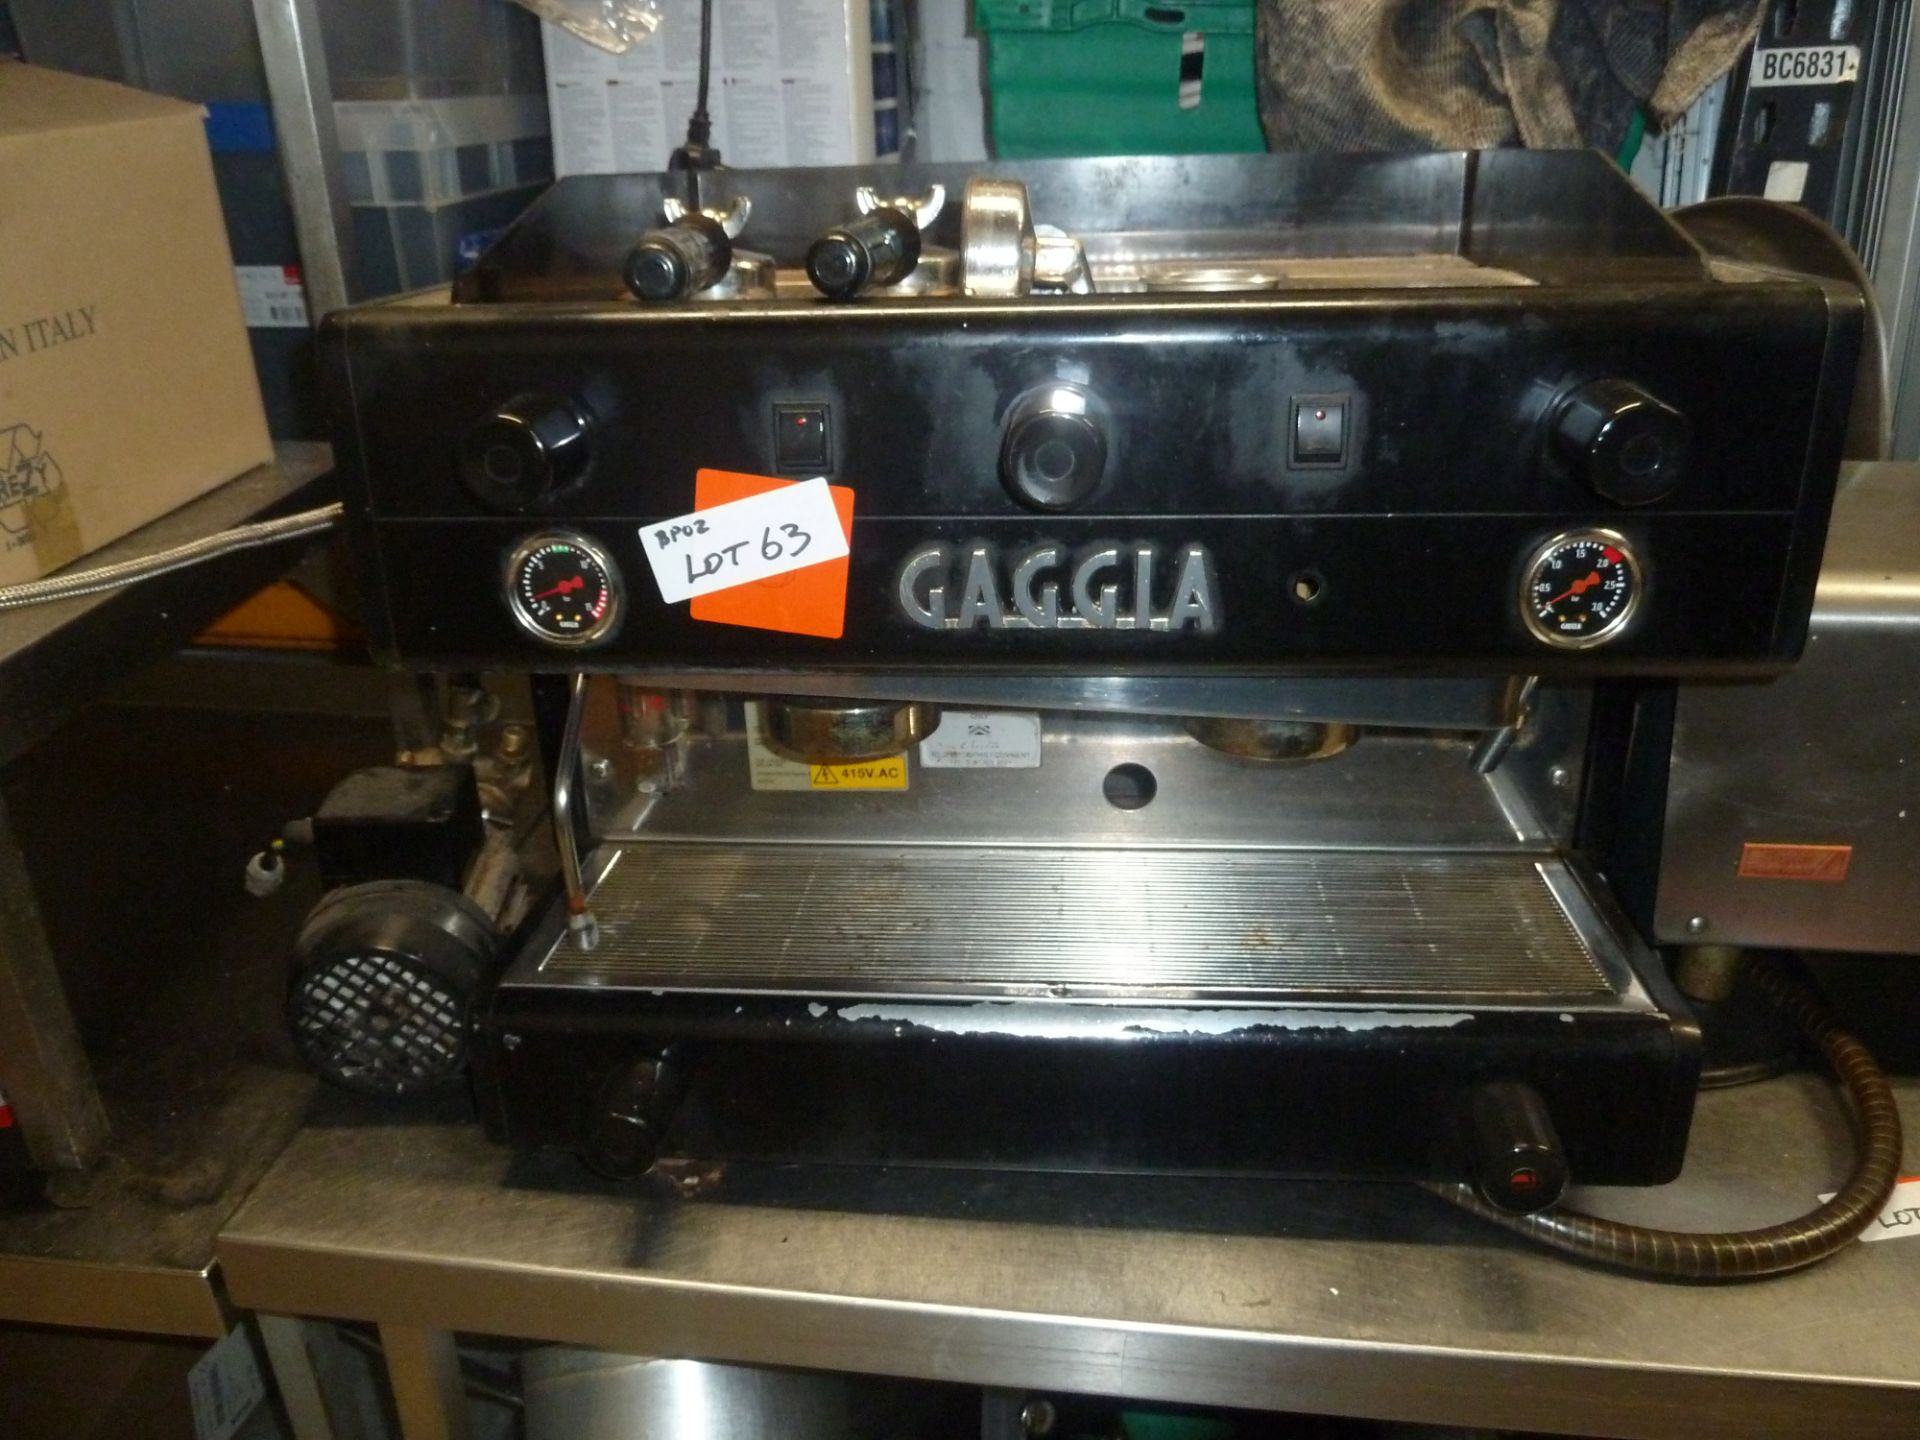 * Gaggia Coffee Machine Premium quality coffee machine, this machine comes with all original extras